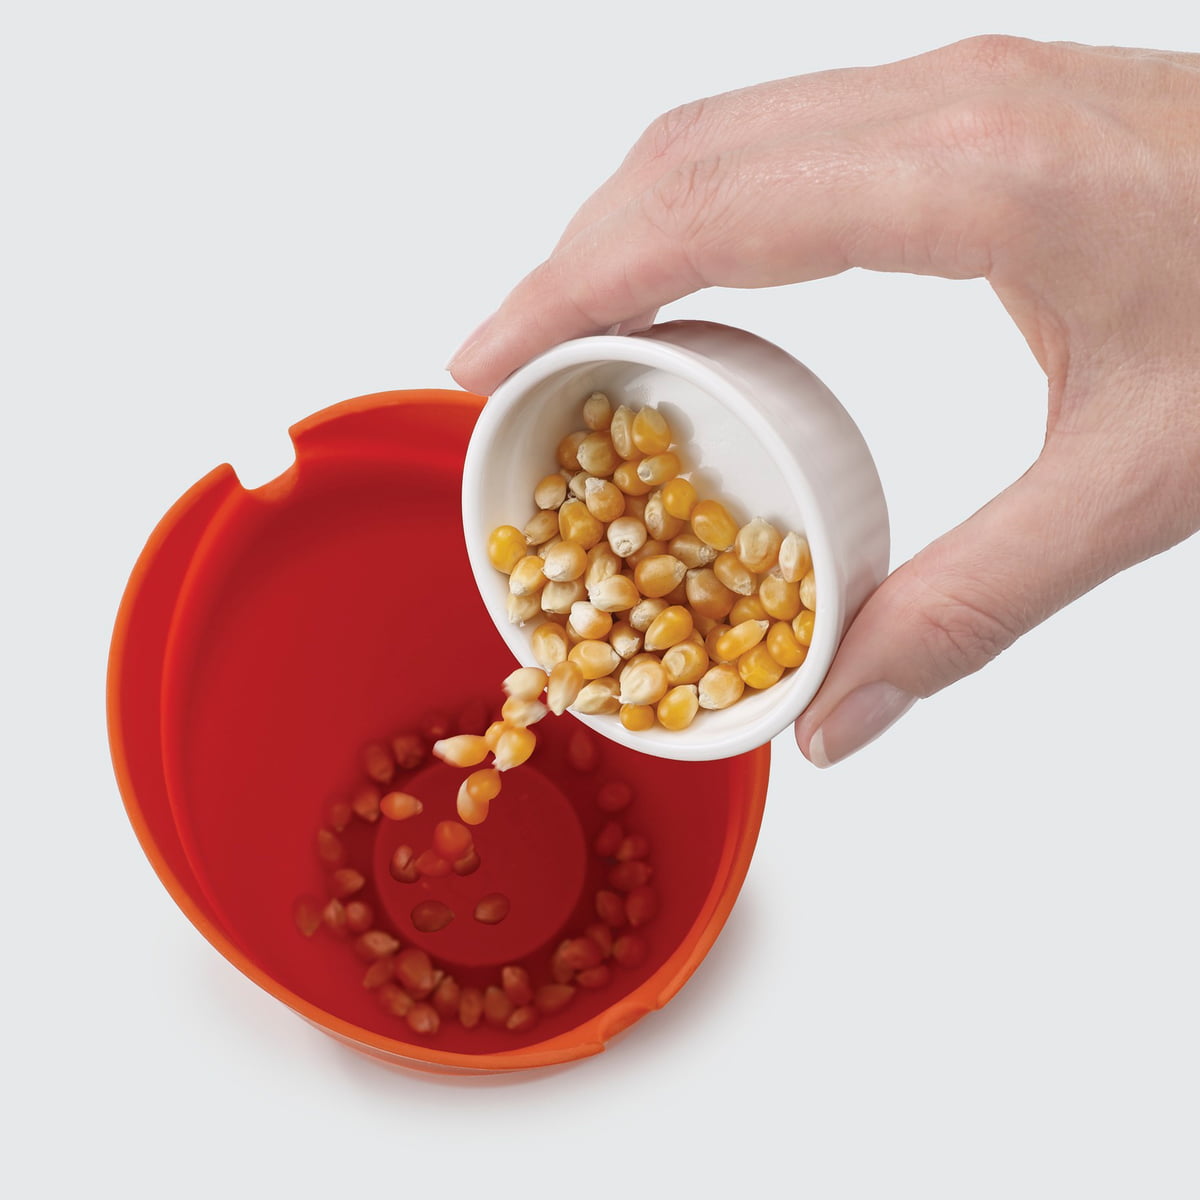 https://cdn.connox.com/m/100035/214373/media/joseph-joseph/M-Cuisine/M-Cuisine-Popcorn/Joseph-Joseph-M-Cuisine-Popcorn-Maker-orange-Mais-einfuellen.jpg